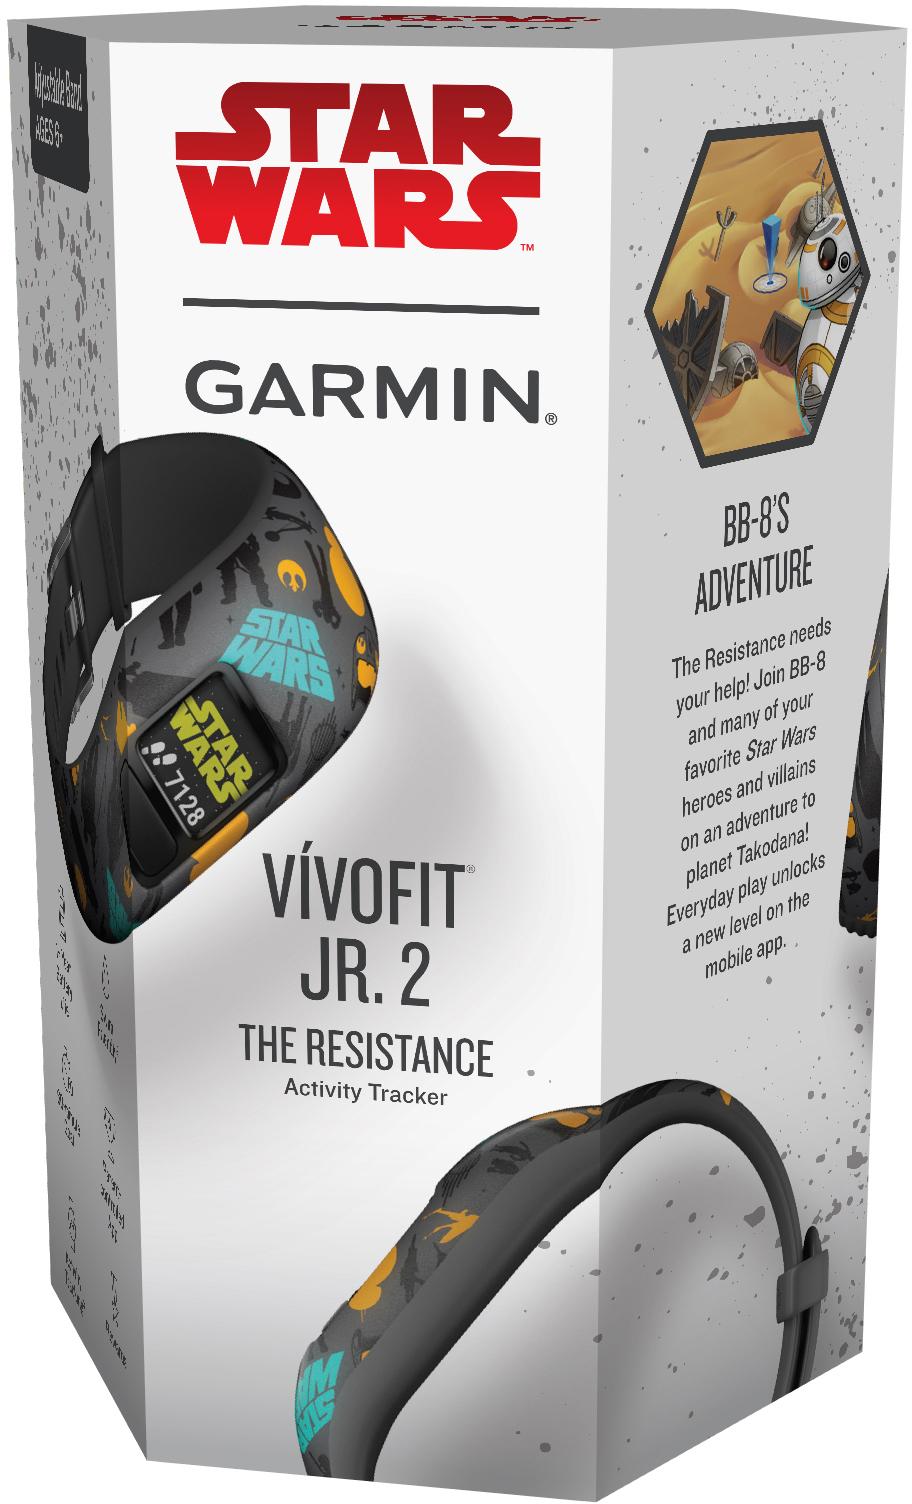 garmin vivofit jr 2 resistance